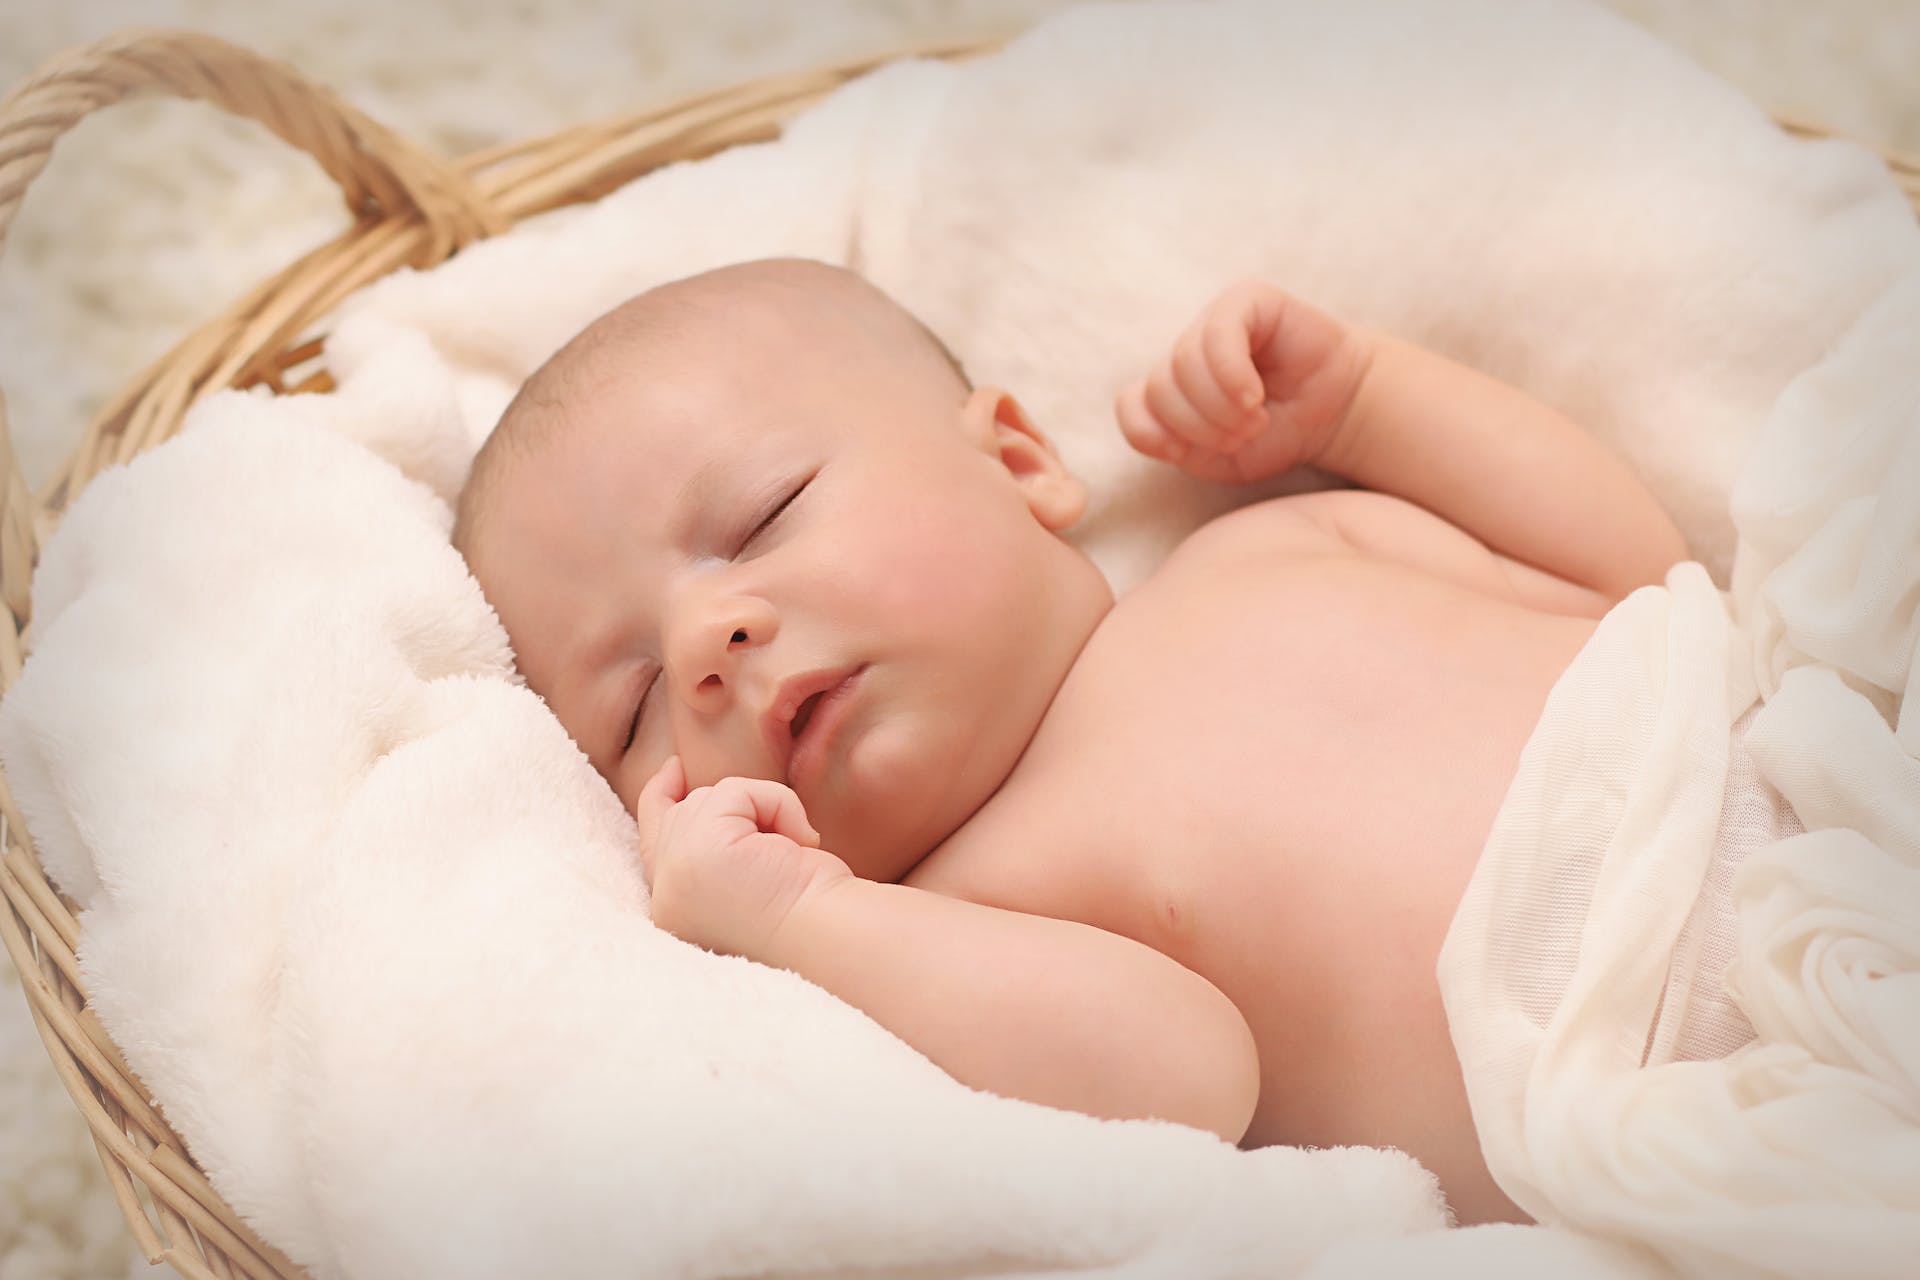 A baby sleeping in a basket | Source: Pexels